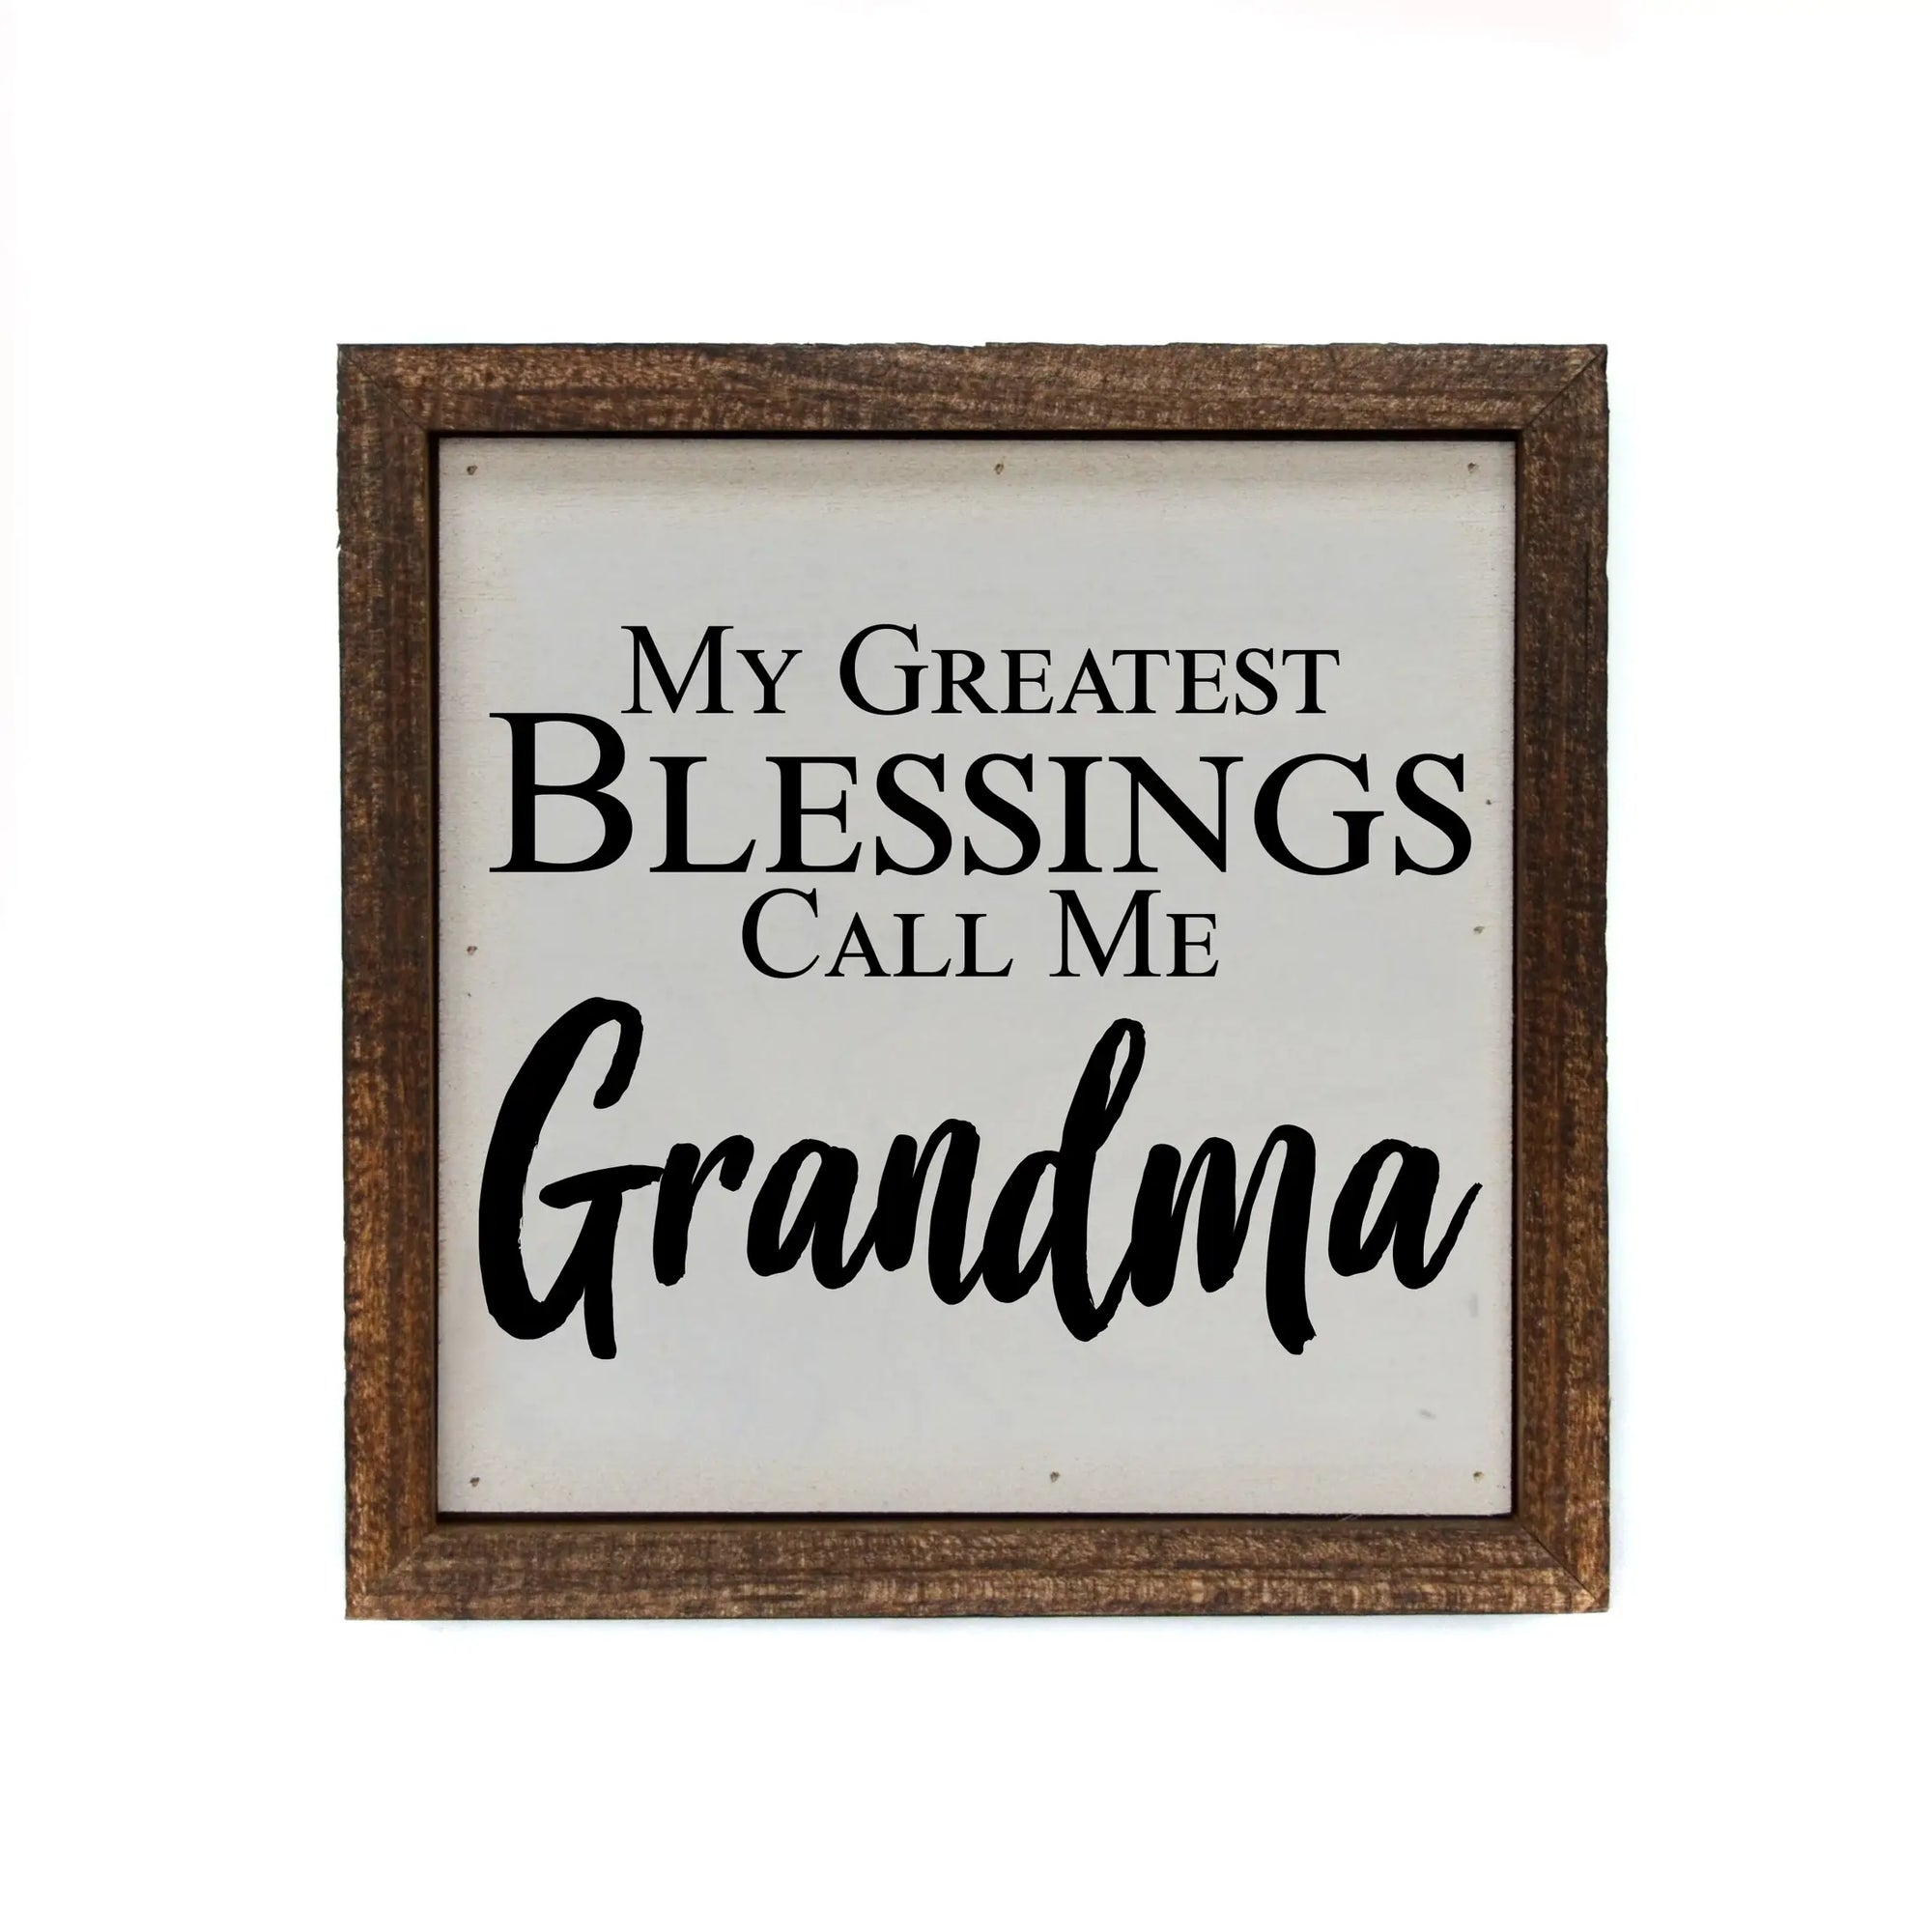 Call Me Grandma Framed Sign